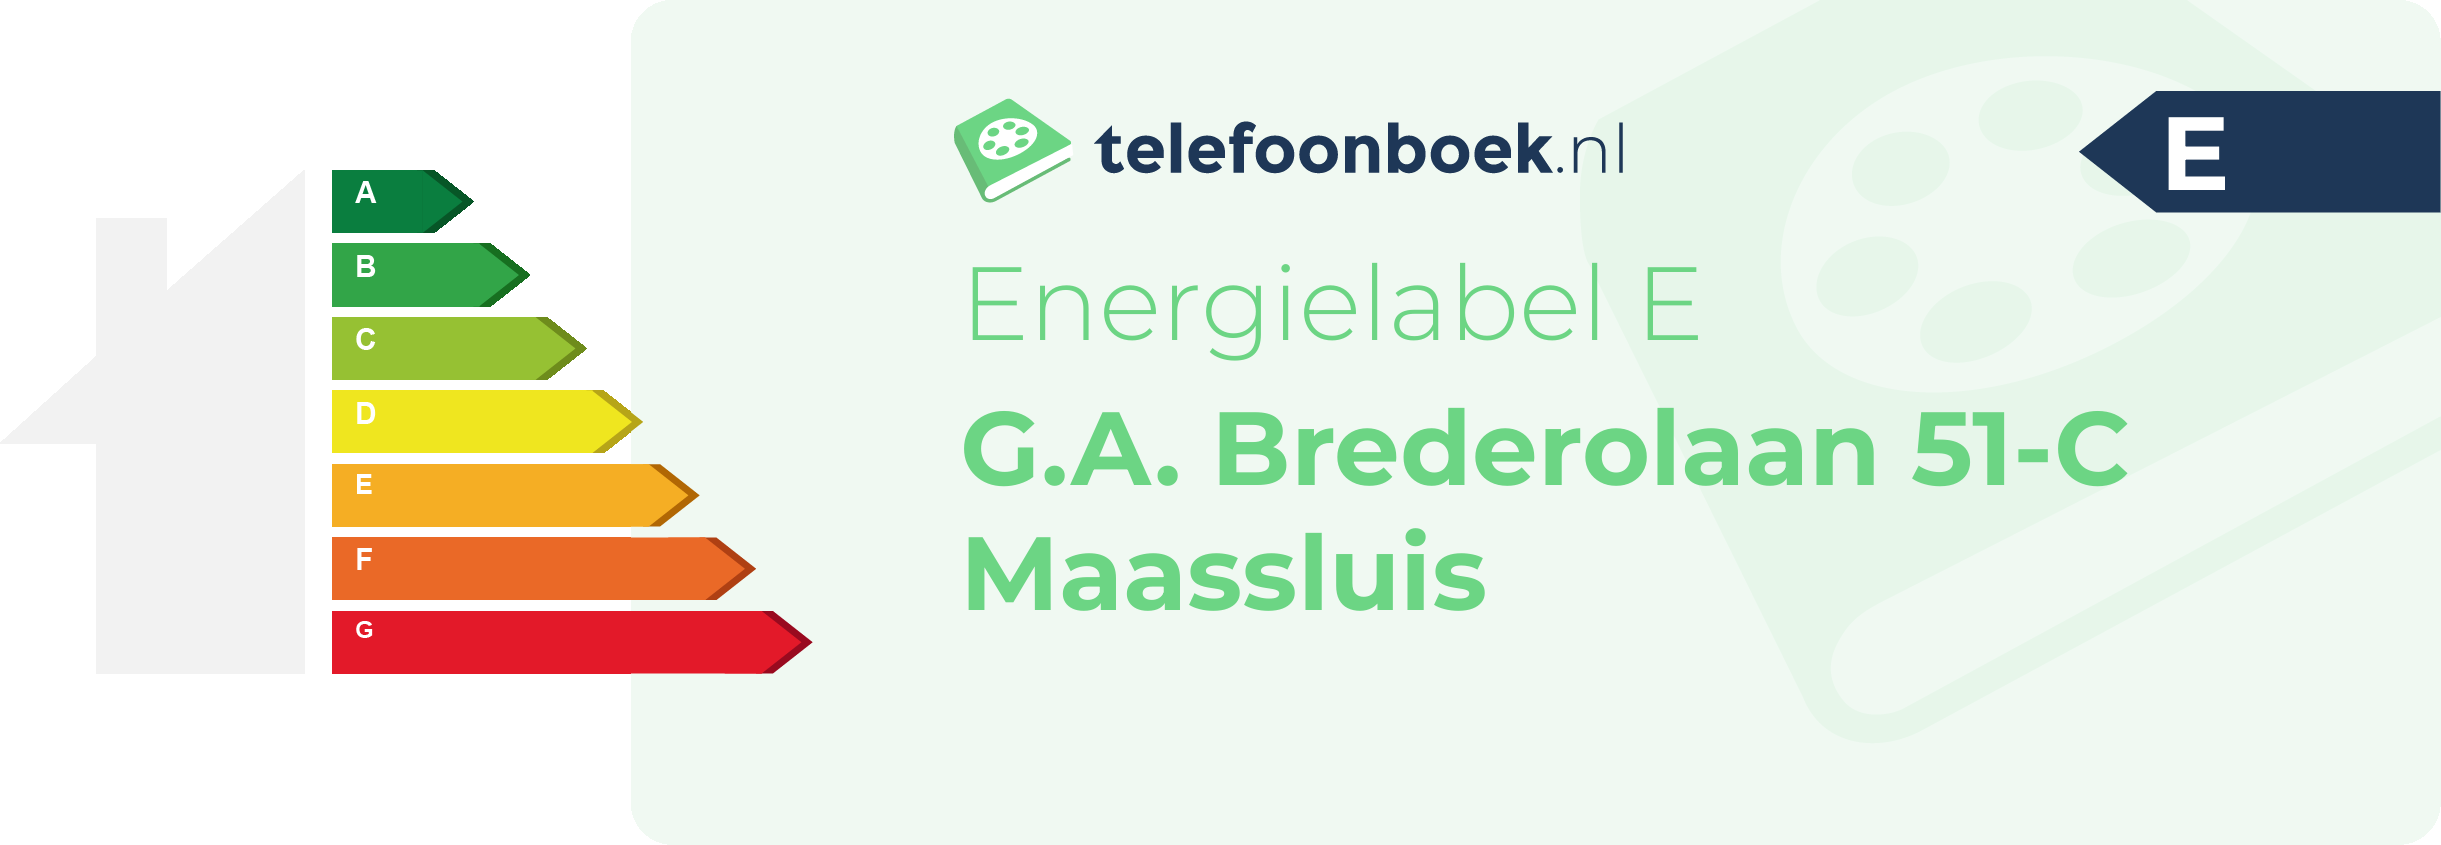 Energielabel G.A. Brederolaan 51-C Maassluis